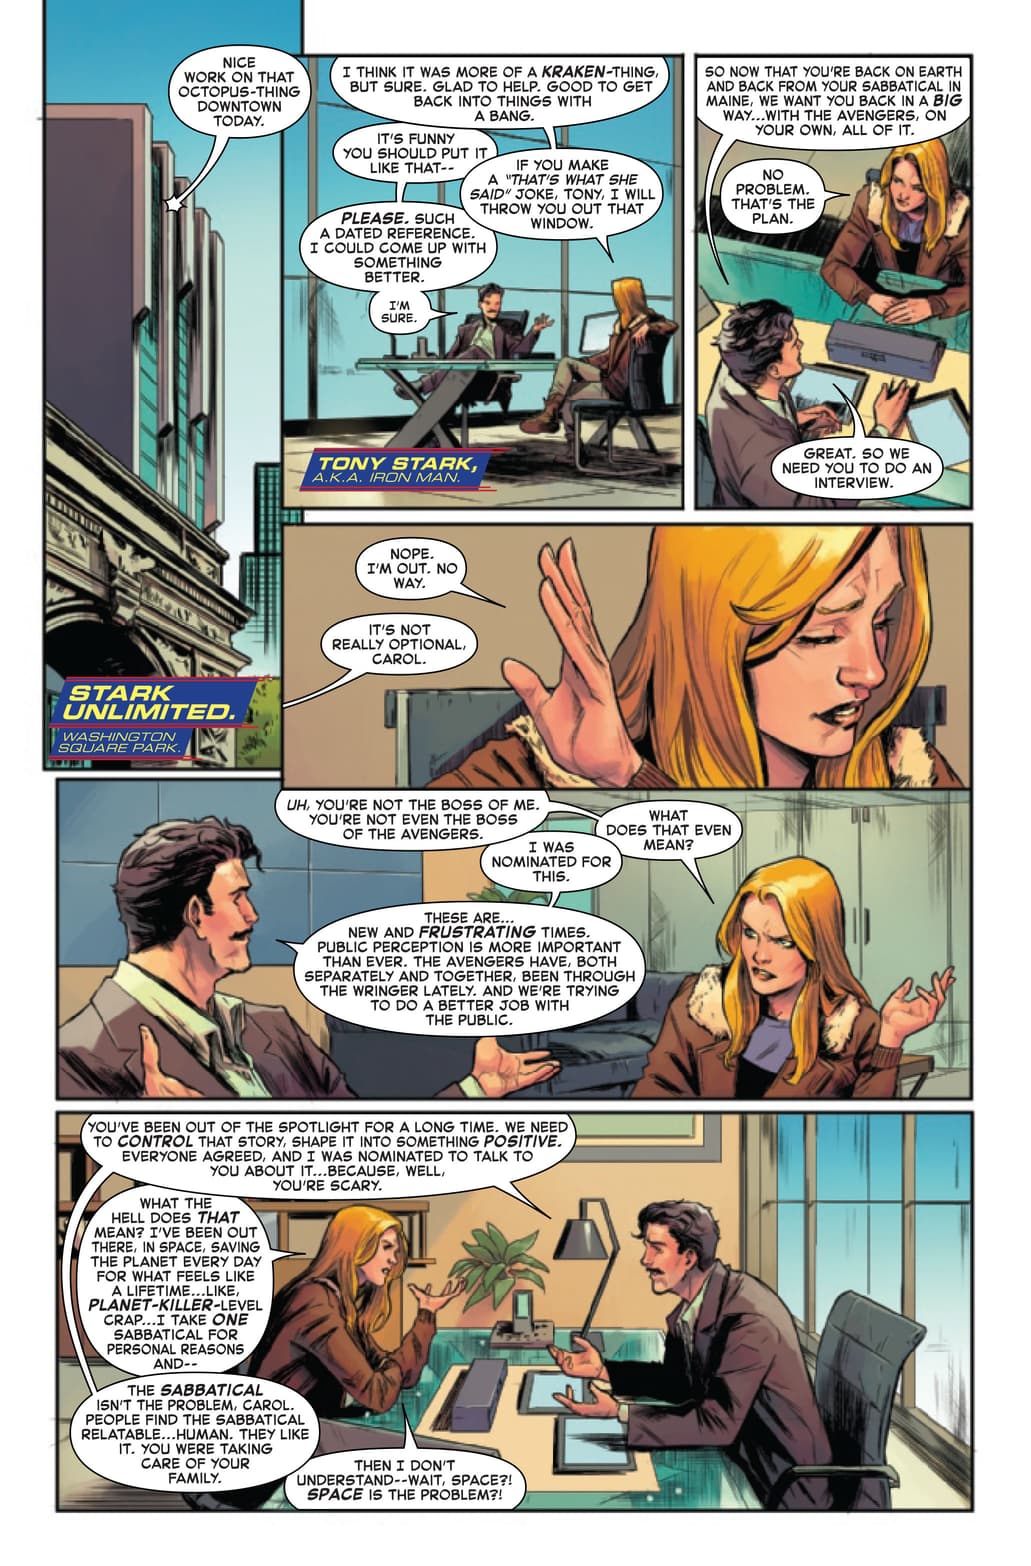 Carol Danvers talking to Tony Stark